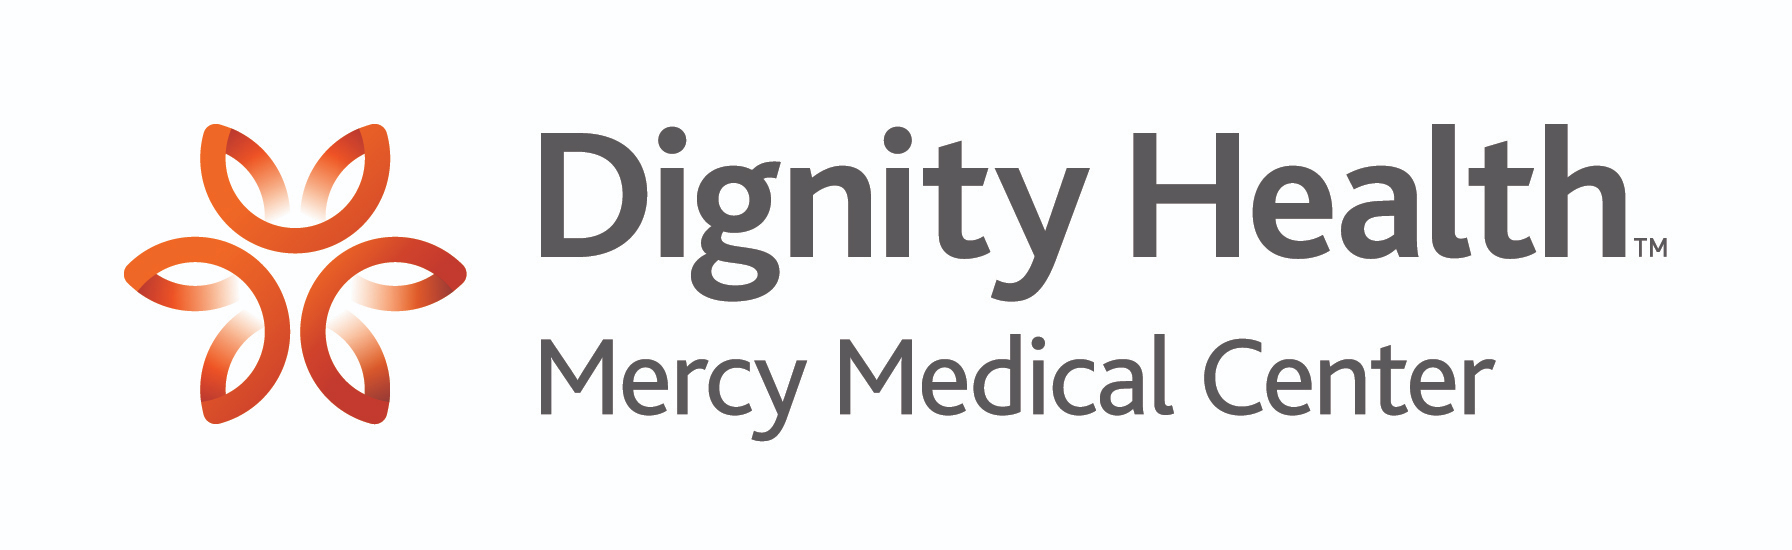 Dignity Health Mercy Medical Center Merced.jpg